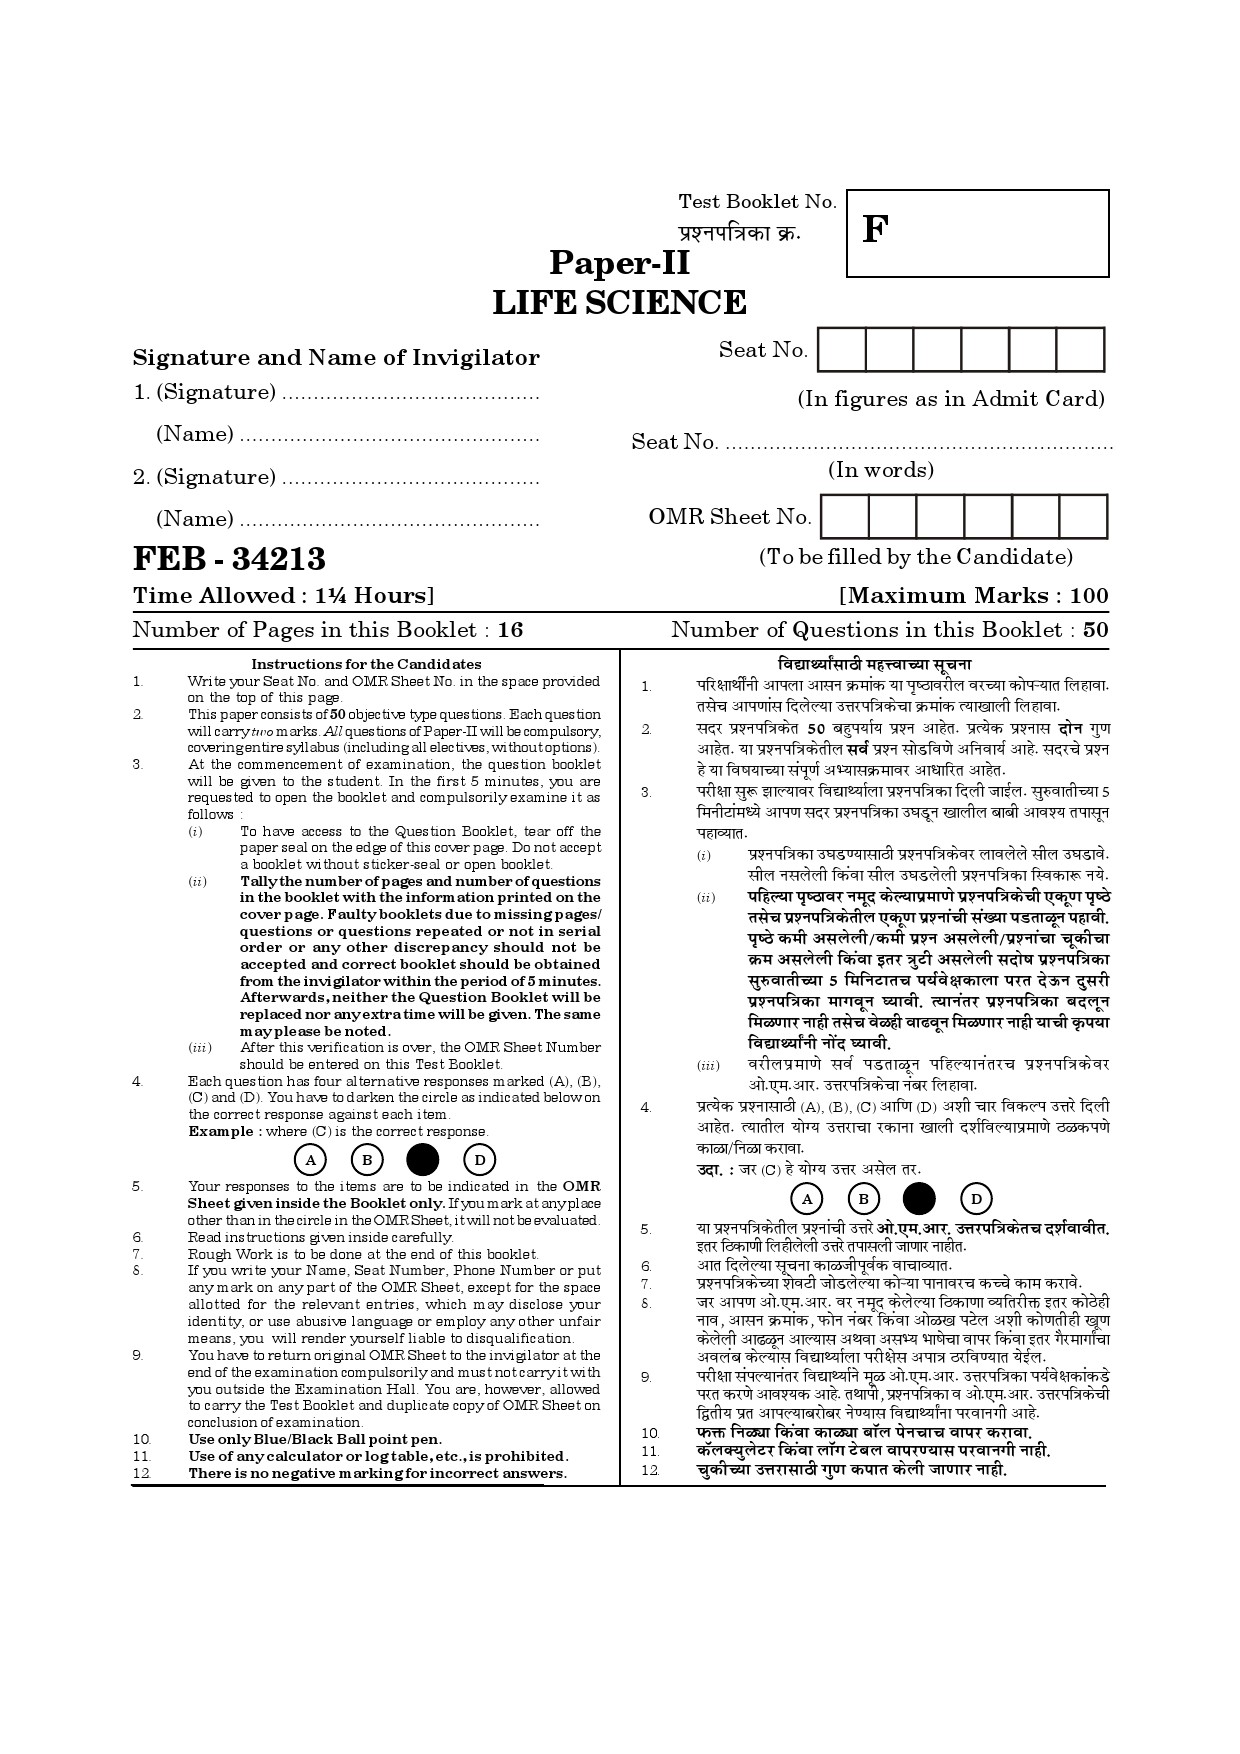 Maharashtra SET Life Sciences Question Paper II February 2013 13